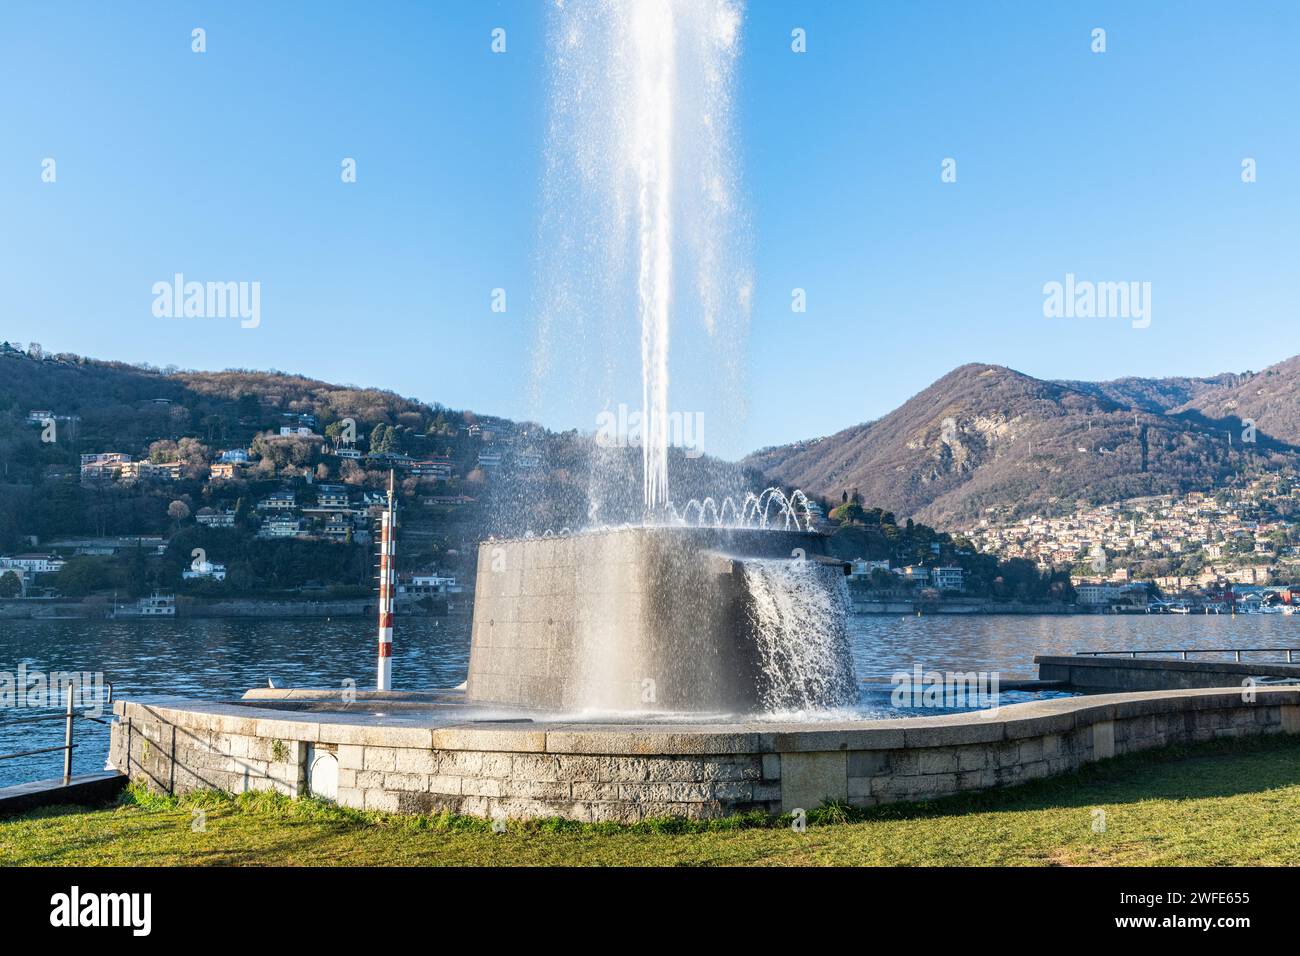 A water fountain display by Lake Como in Como, Italy Stock Photo